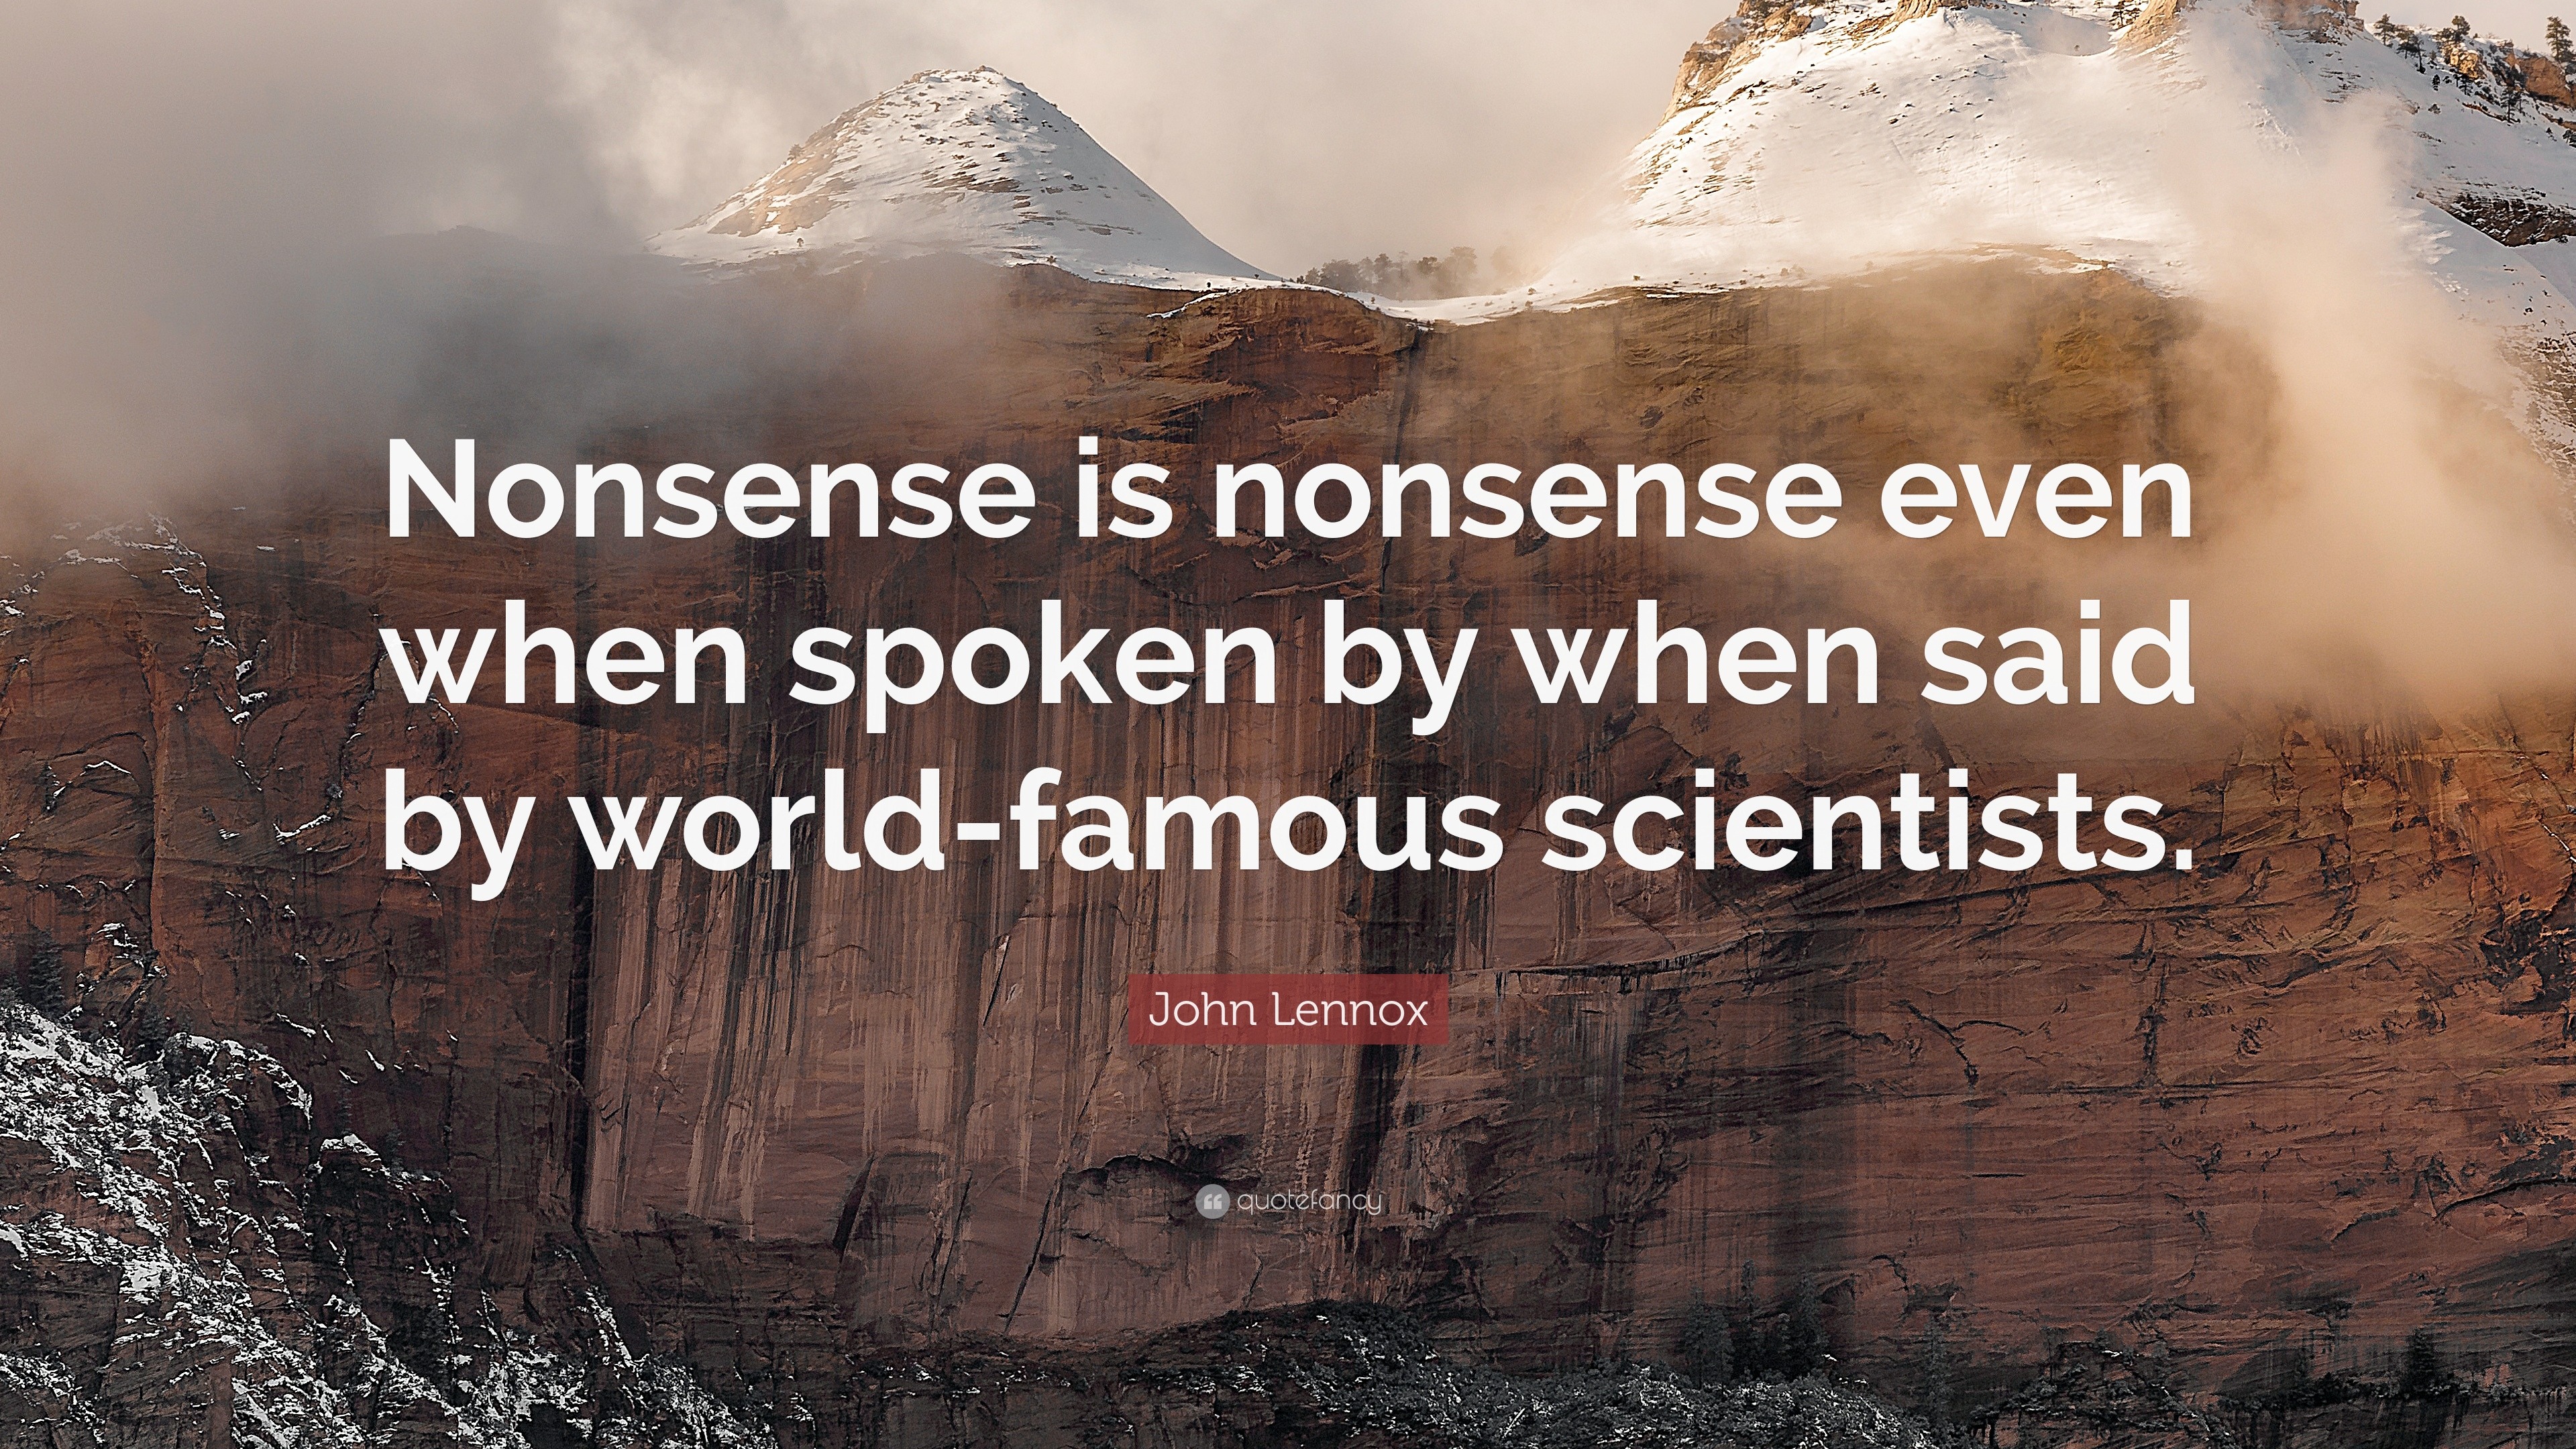 John Lennox Quote “Nonsense is nonsense even when spoken by when said by world